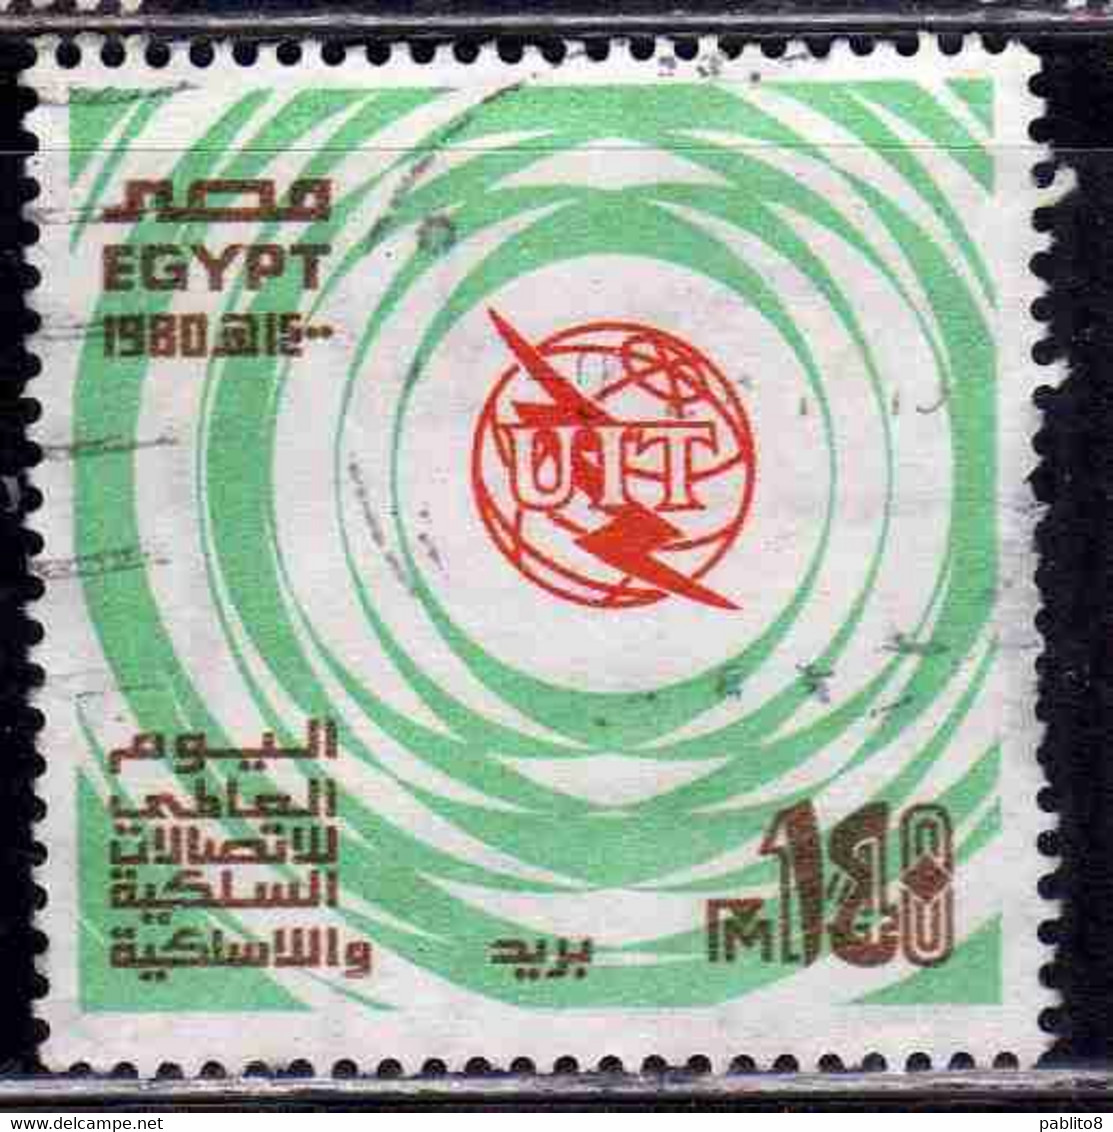 UAR EGYPT EGITTO 1980 UN ONU DAY INTERNATIONAL TELECOMMUNICATIONS DAY UNION 140m USED USATO OBLITERE' - Oblitérés